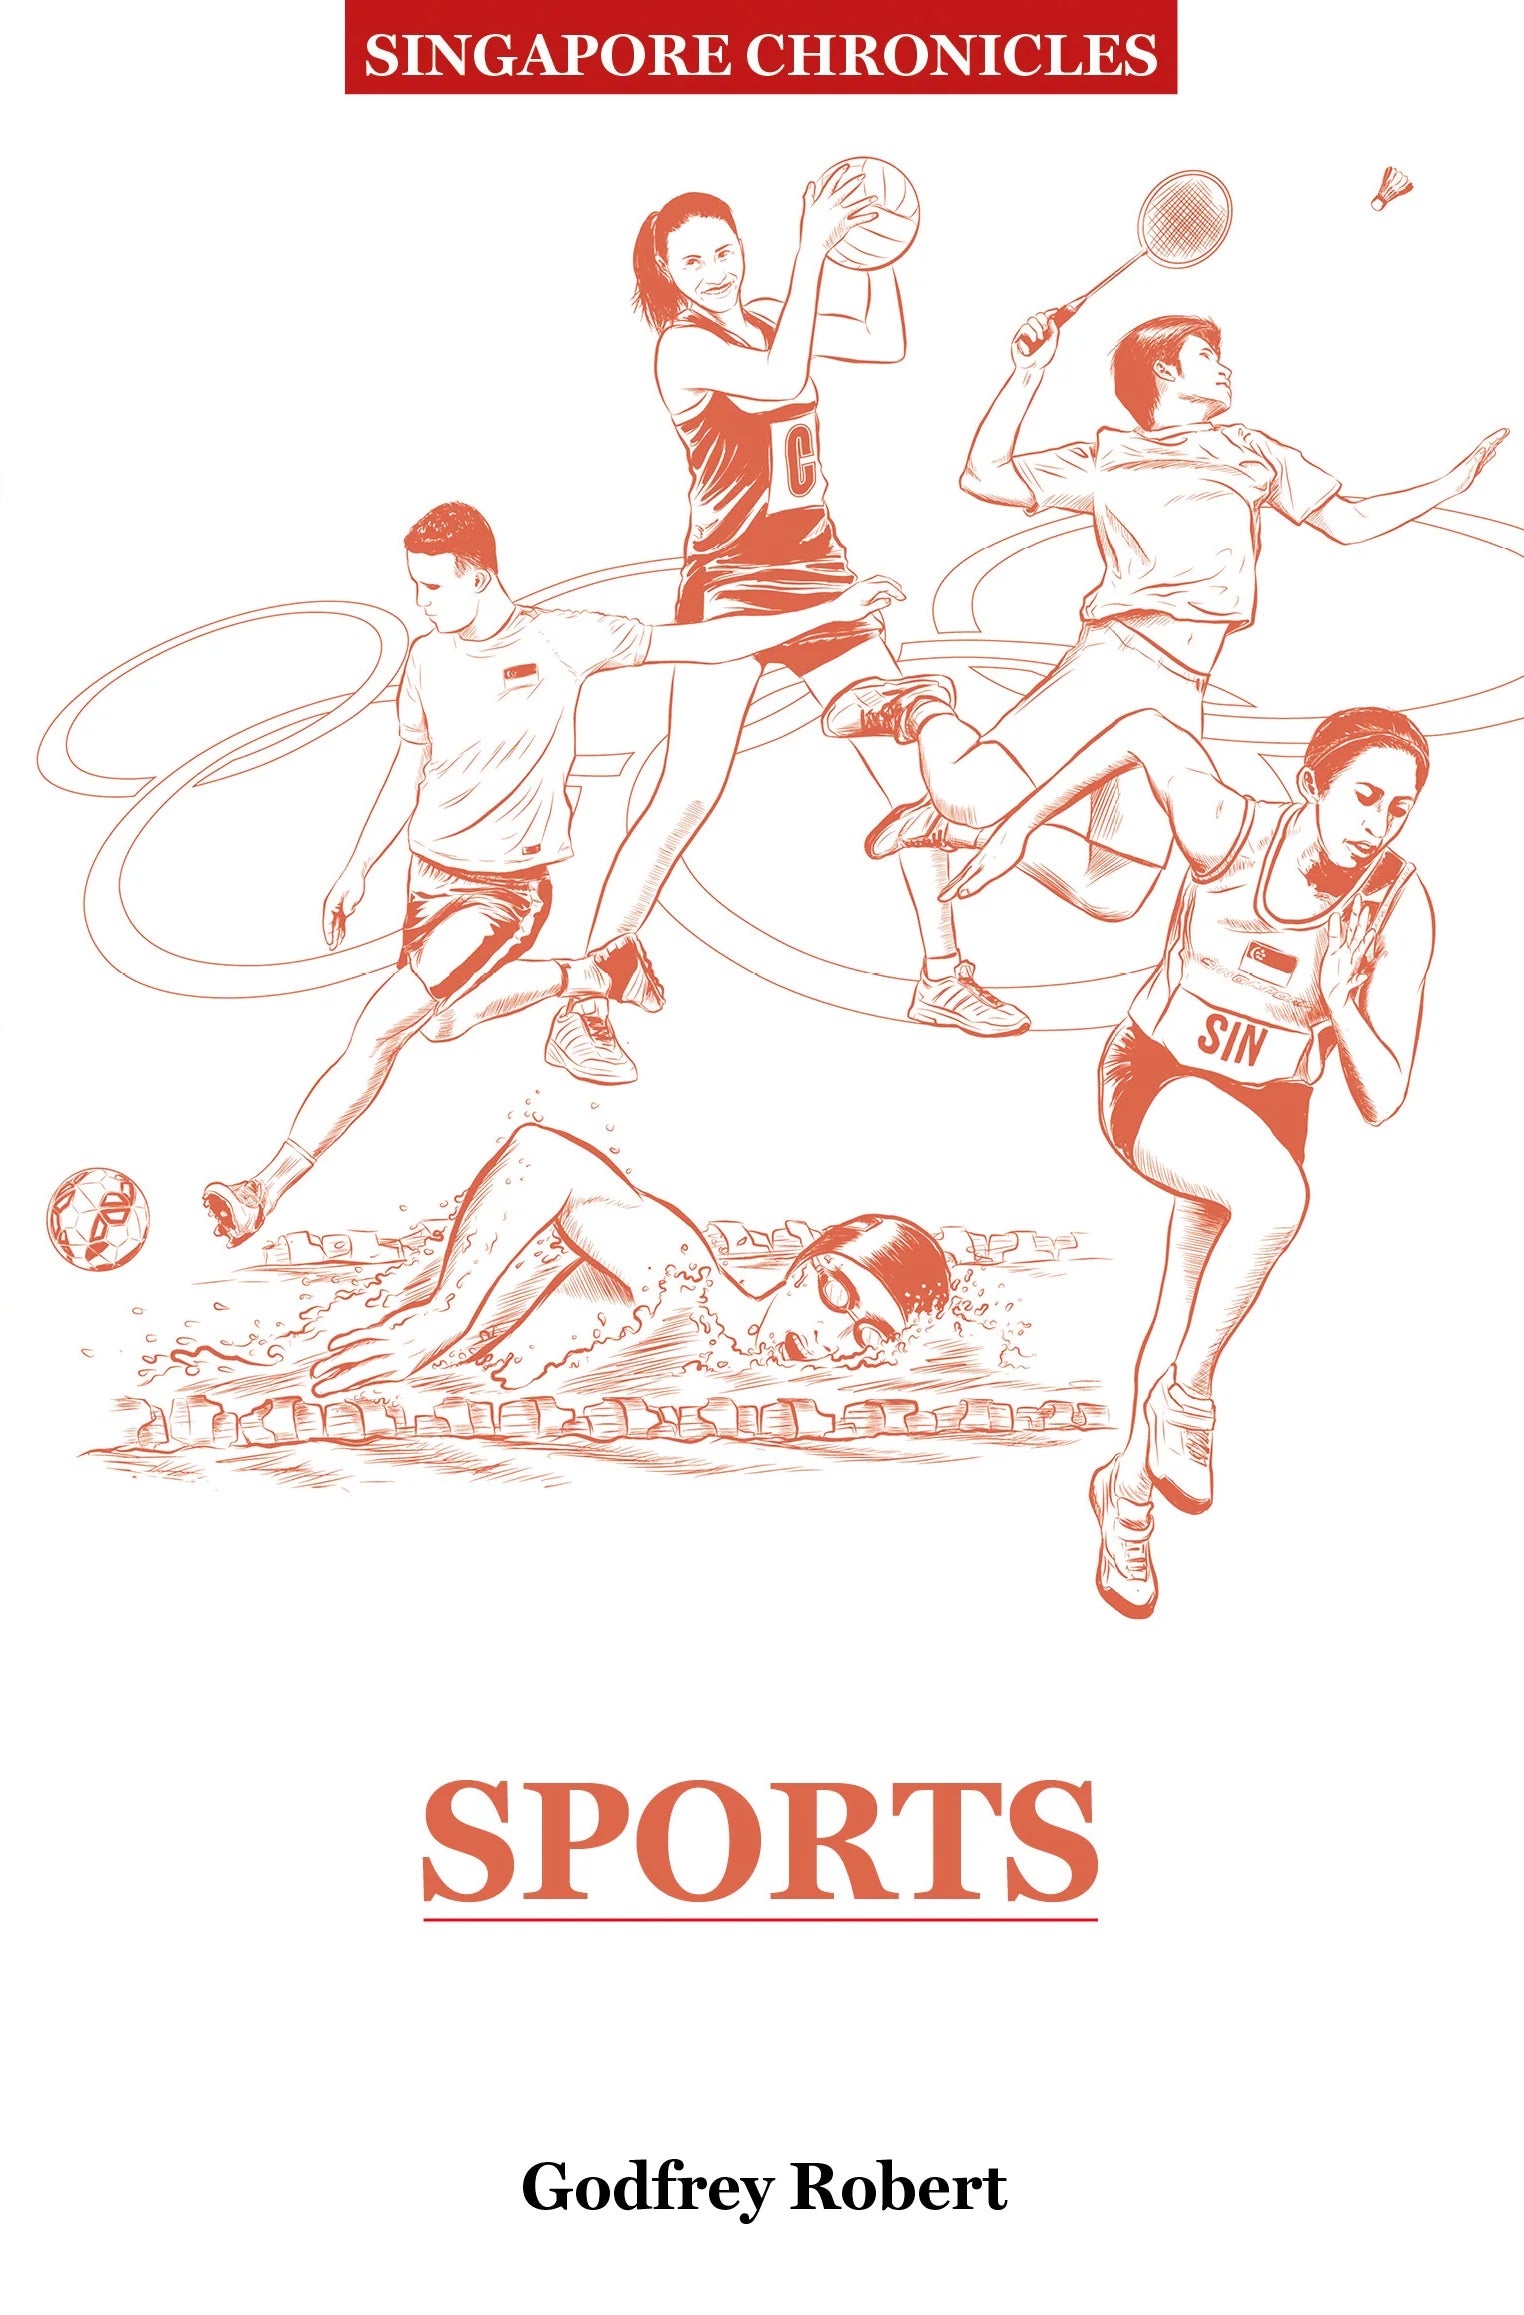 Singapore Chronicles: Sports